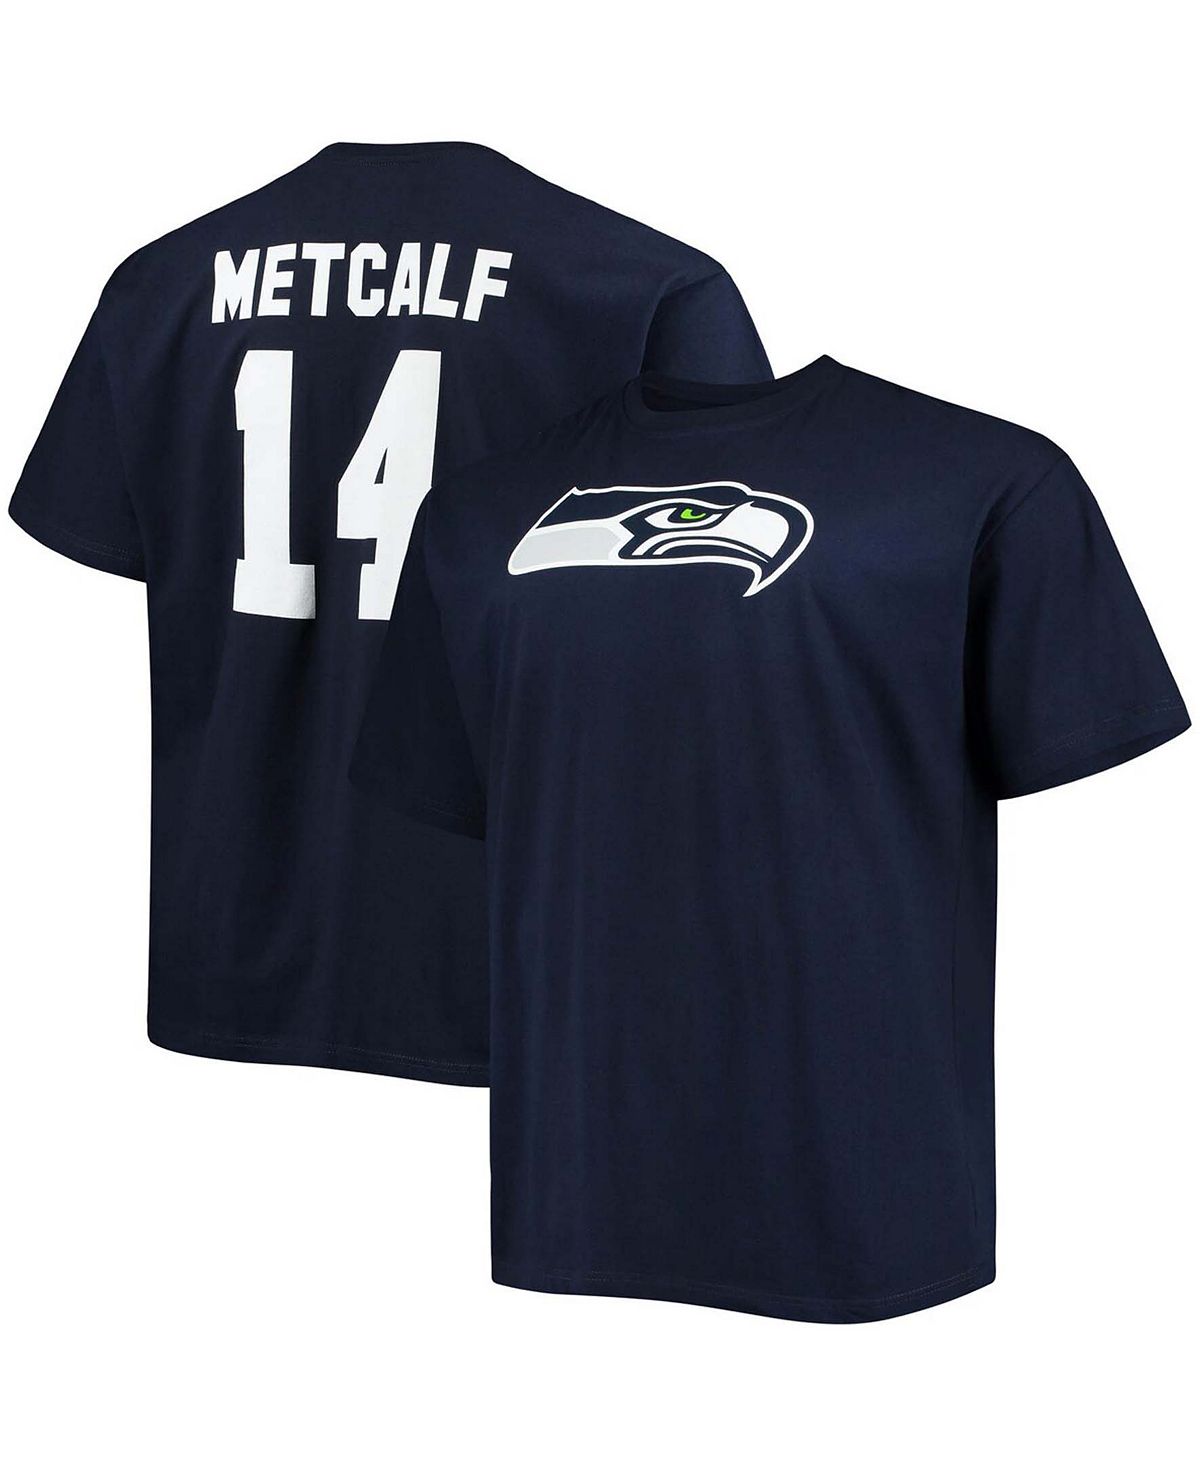 Мужская футболка big and tall dk metcalf college navy seattle seahawks с именем и номером игрока Fanatics, синий